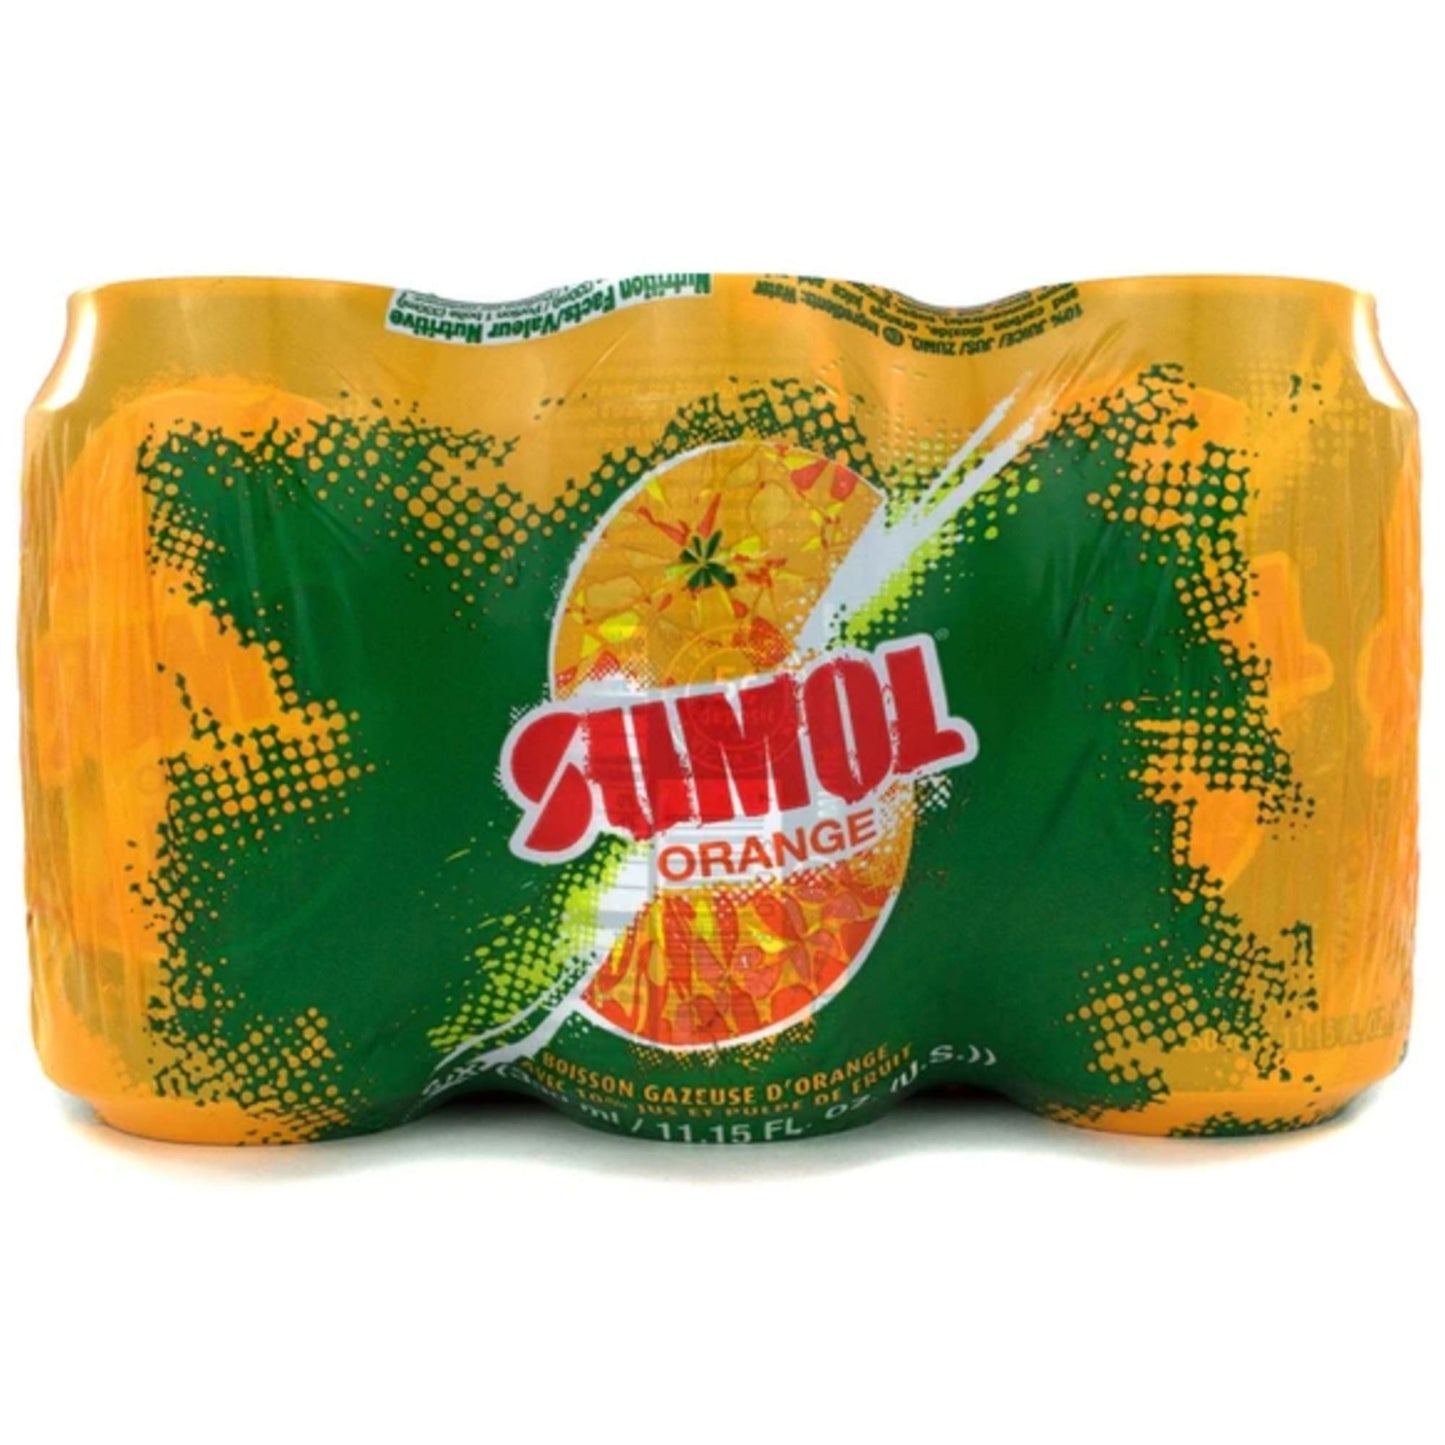 Sumol Orange 6X330Ml